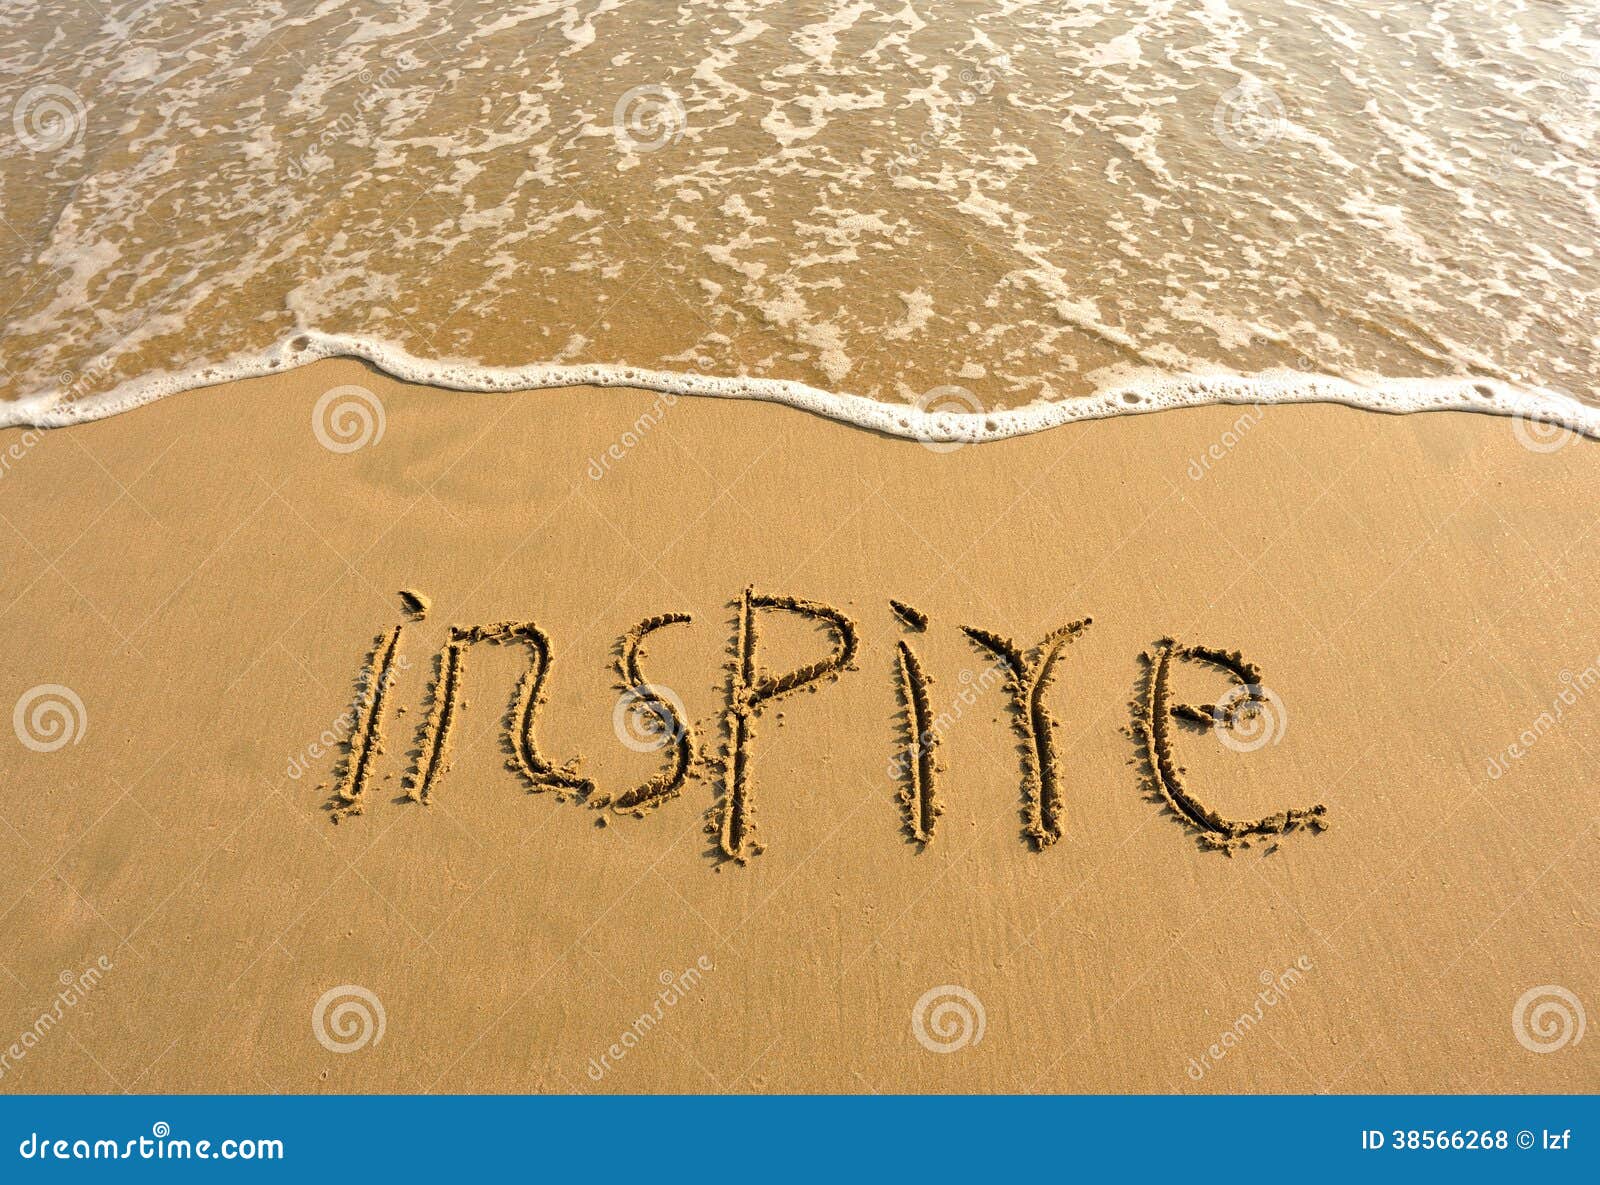 inspire drawn on the beach